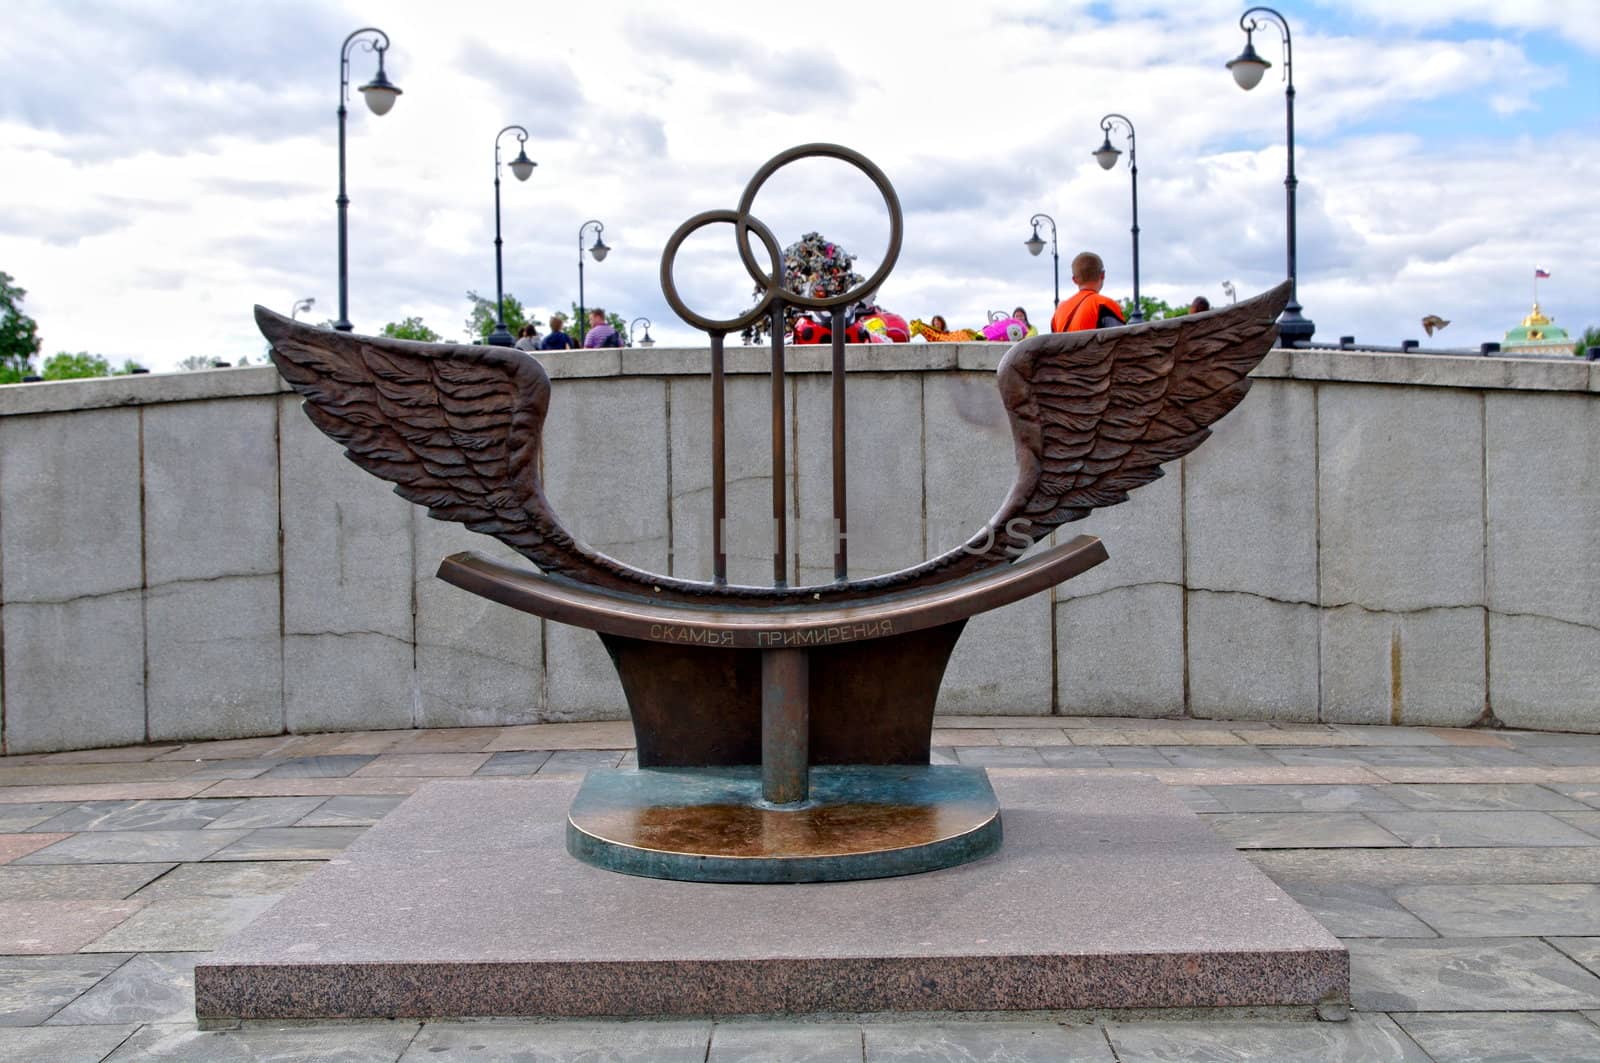 Bench of reconciliation in Luzhkov bridge, Moscow, Russia by Stoyanov